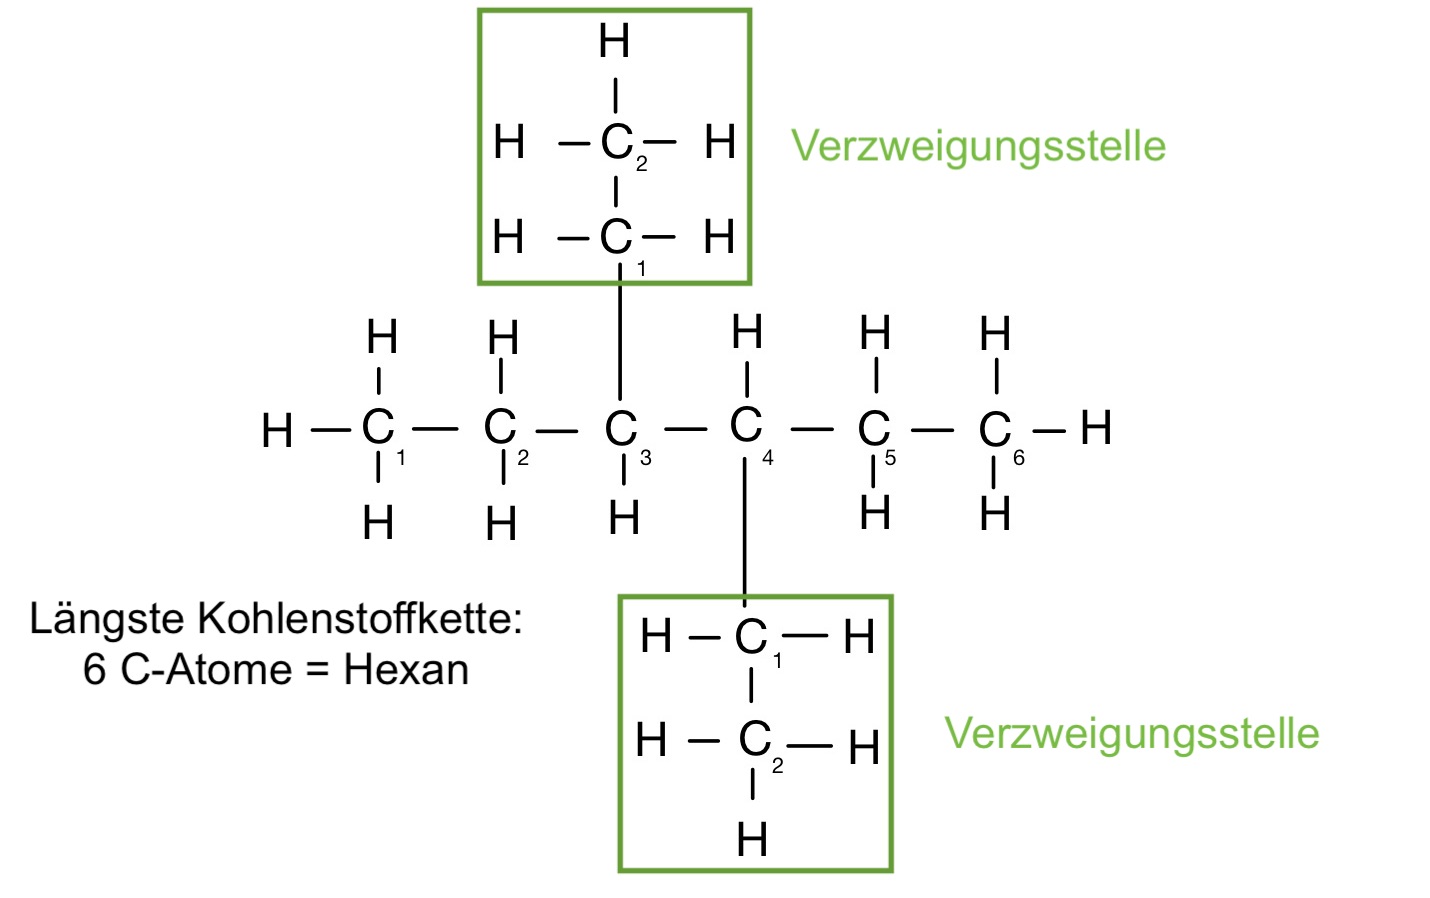 3,4-diethylhexan